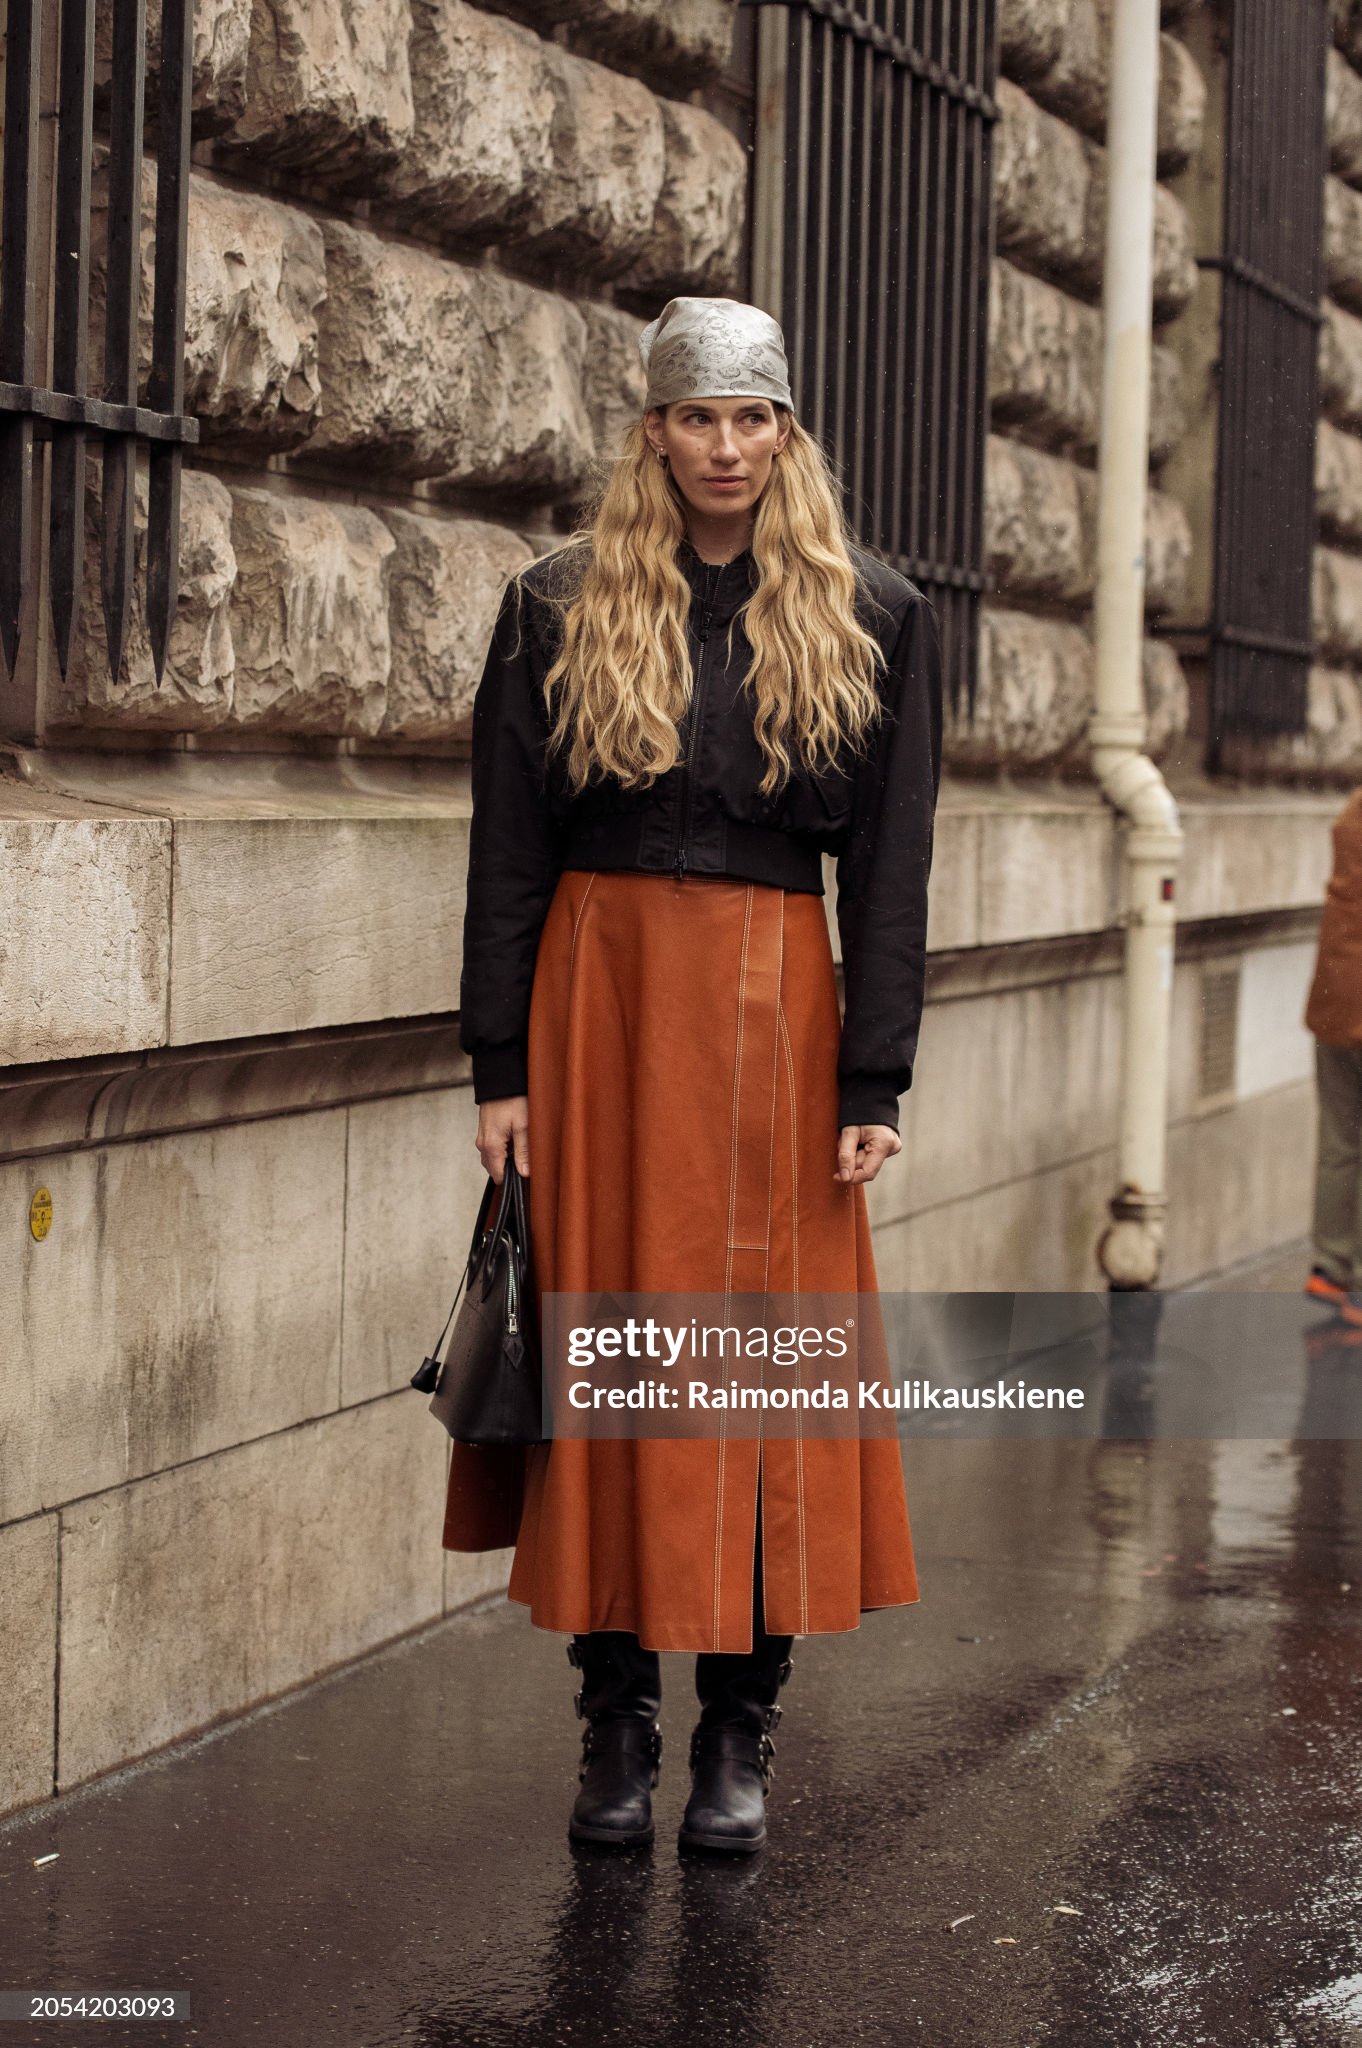 paris-france-veronika-heilbrunner-wears-a-long-brown-leather-skirt-with-a-split-black-cropped.jpg